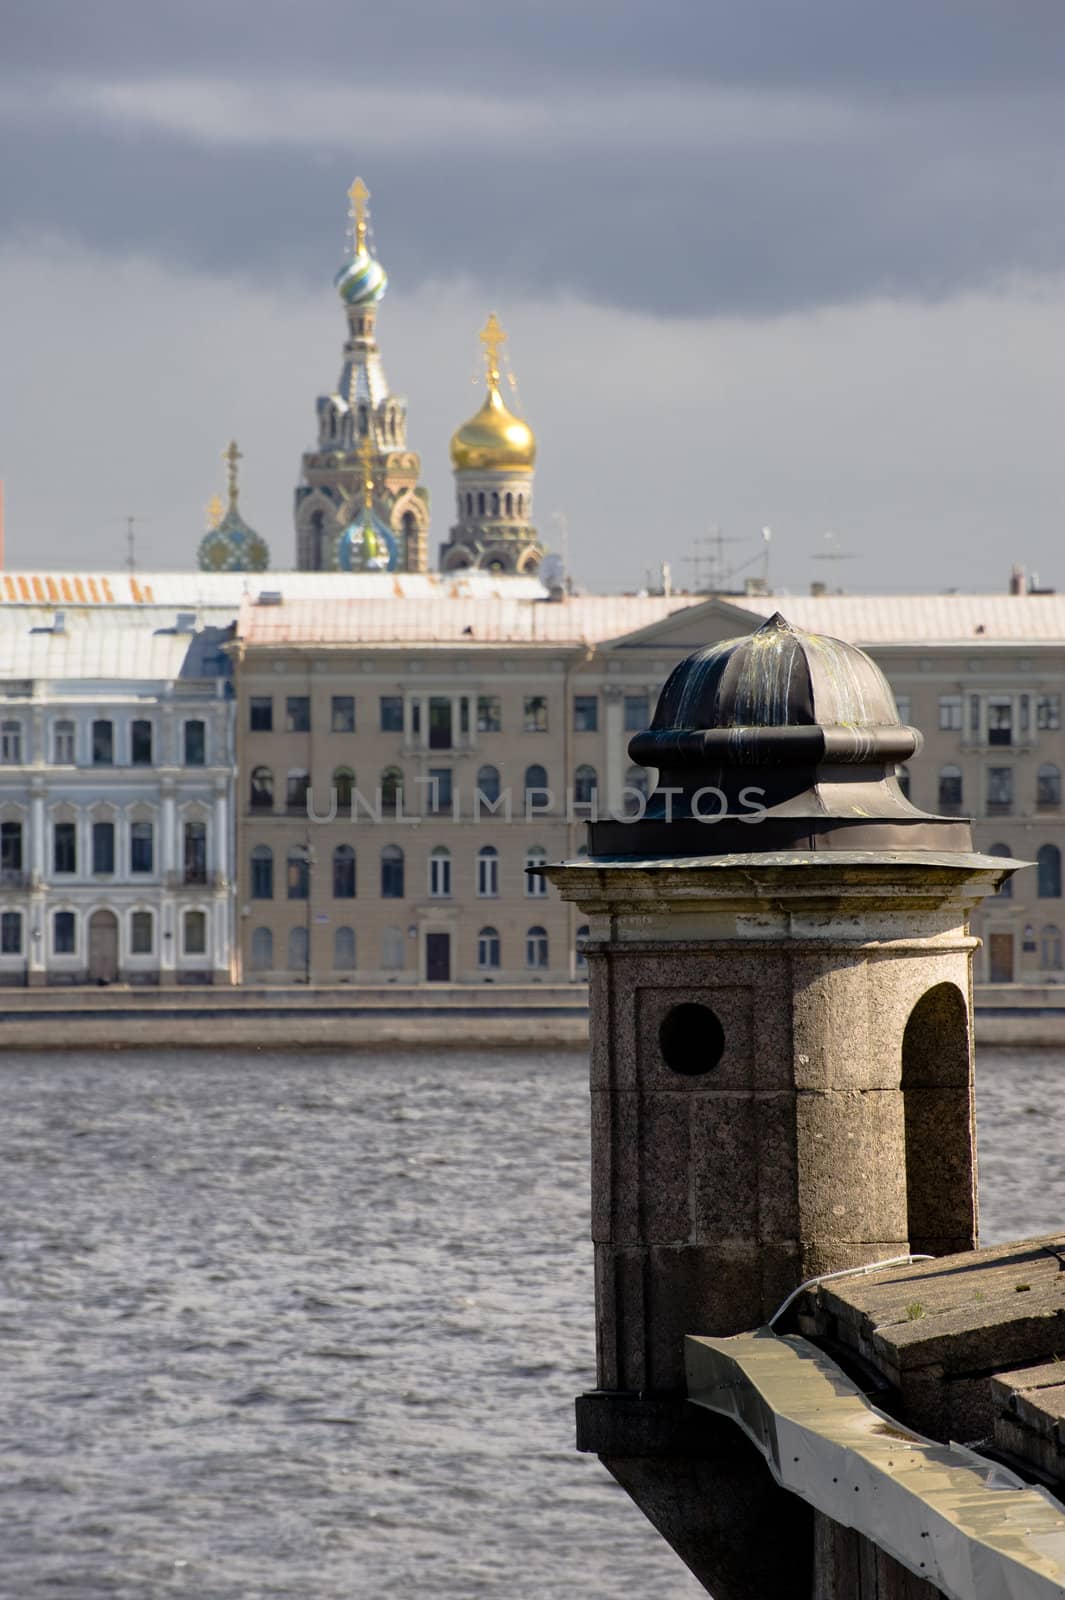 Sankt Petersburg by Alenmax